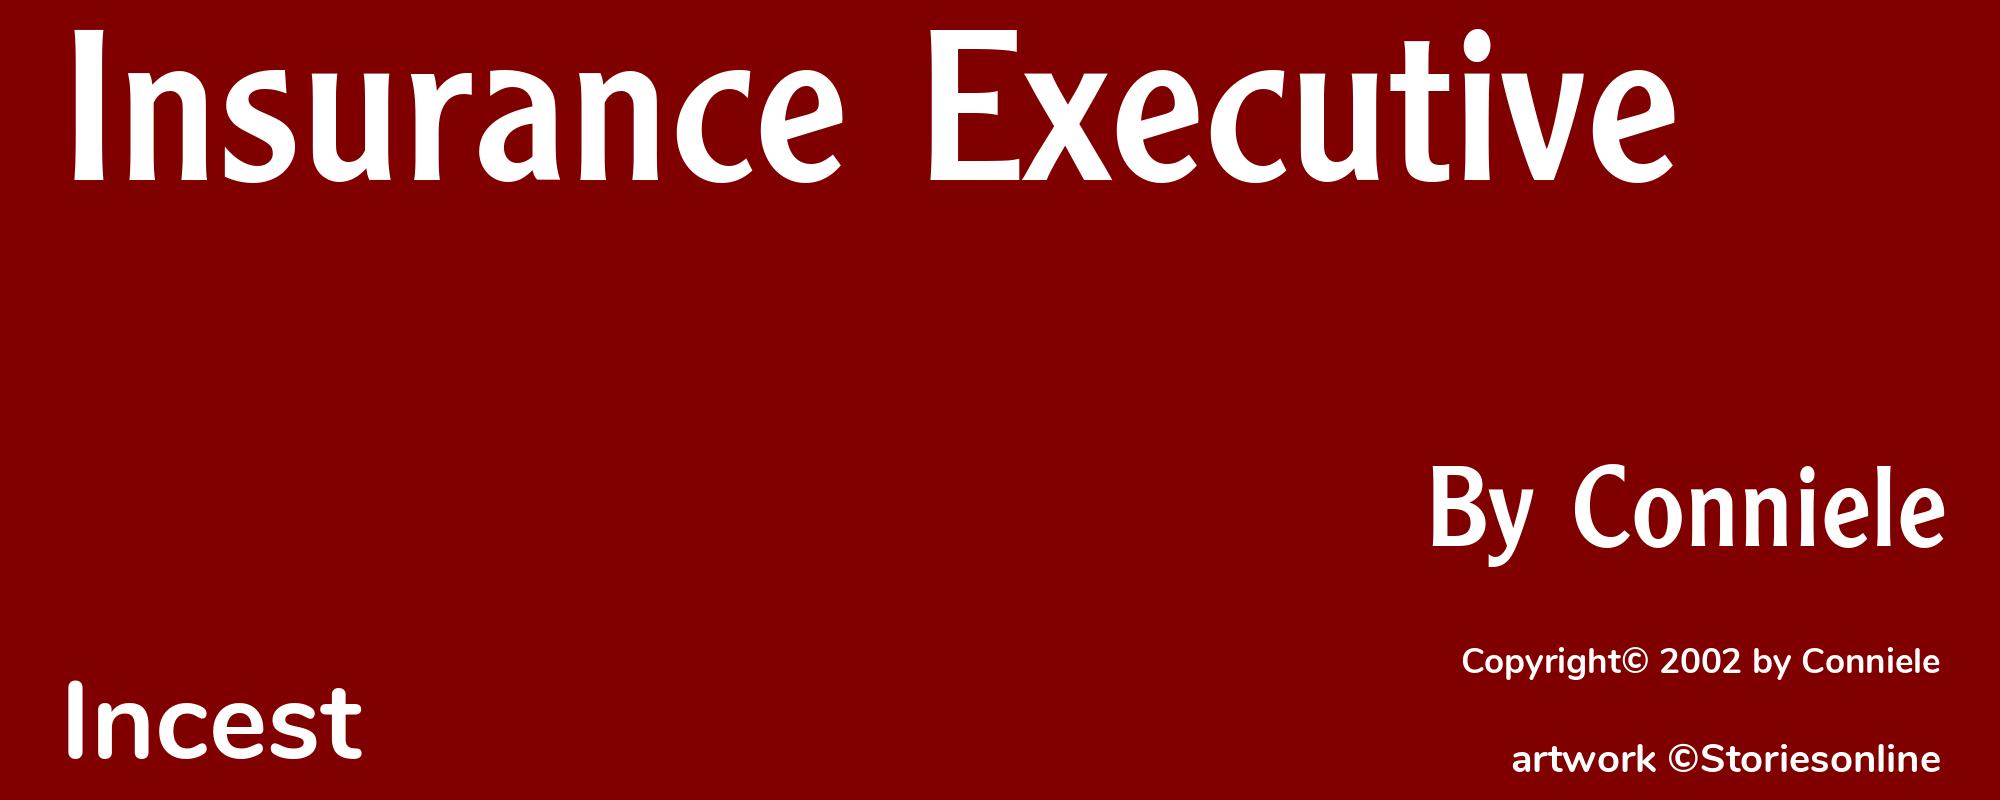 Insurance Executive - Cover